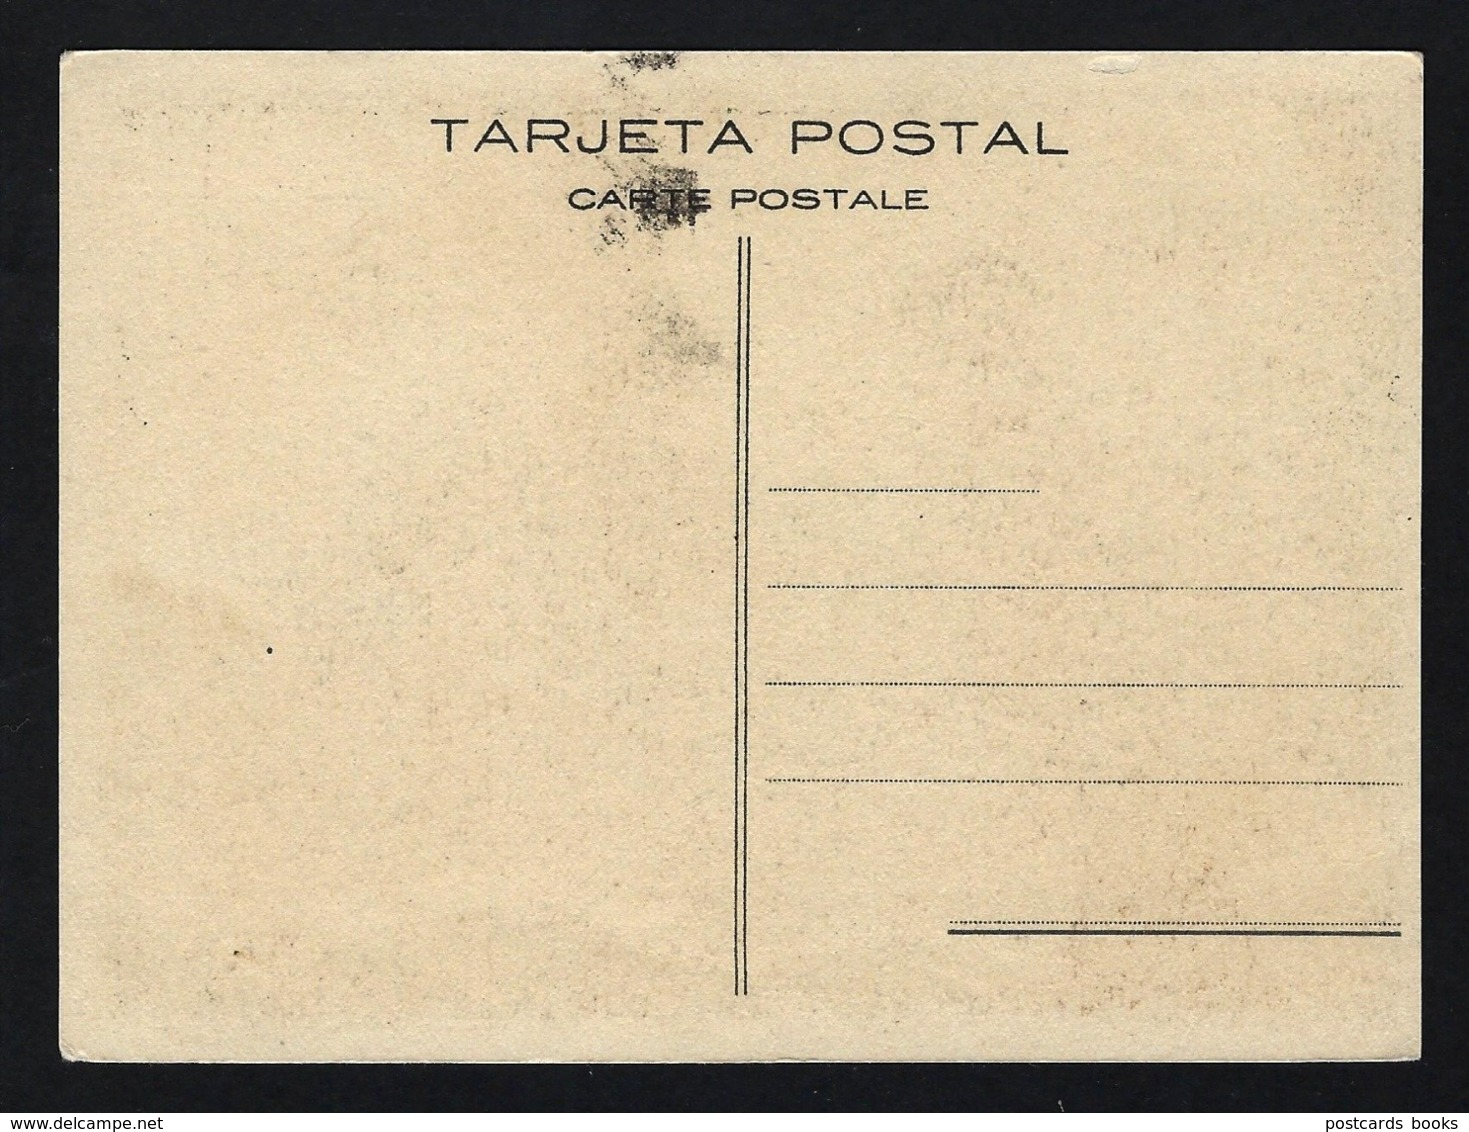 PAIS VASCO / PAYS BASQUE. Vtg Postcard By A.CABANAS. Editor: Lit Laborde Y Labayen - Tolosa. Tarjeta Postal SPAIN ESPANA - Guipúzcoa (San Sebastián)